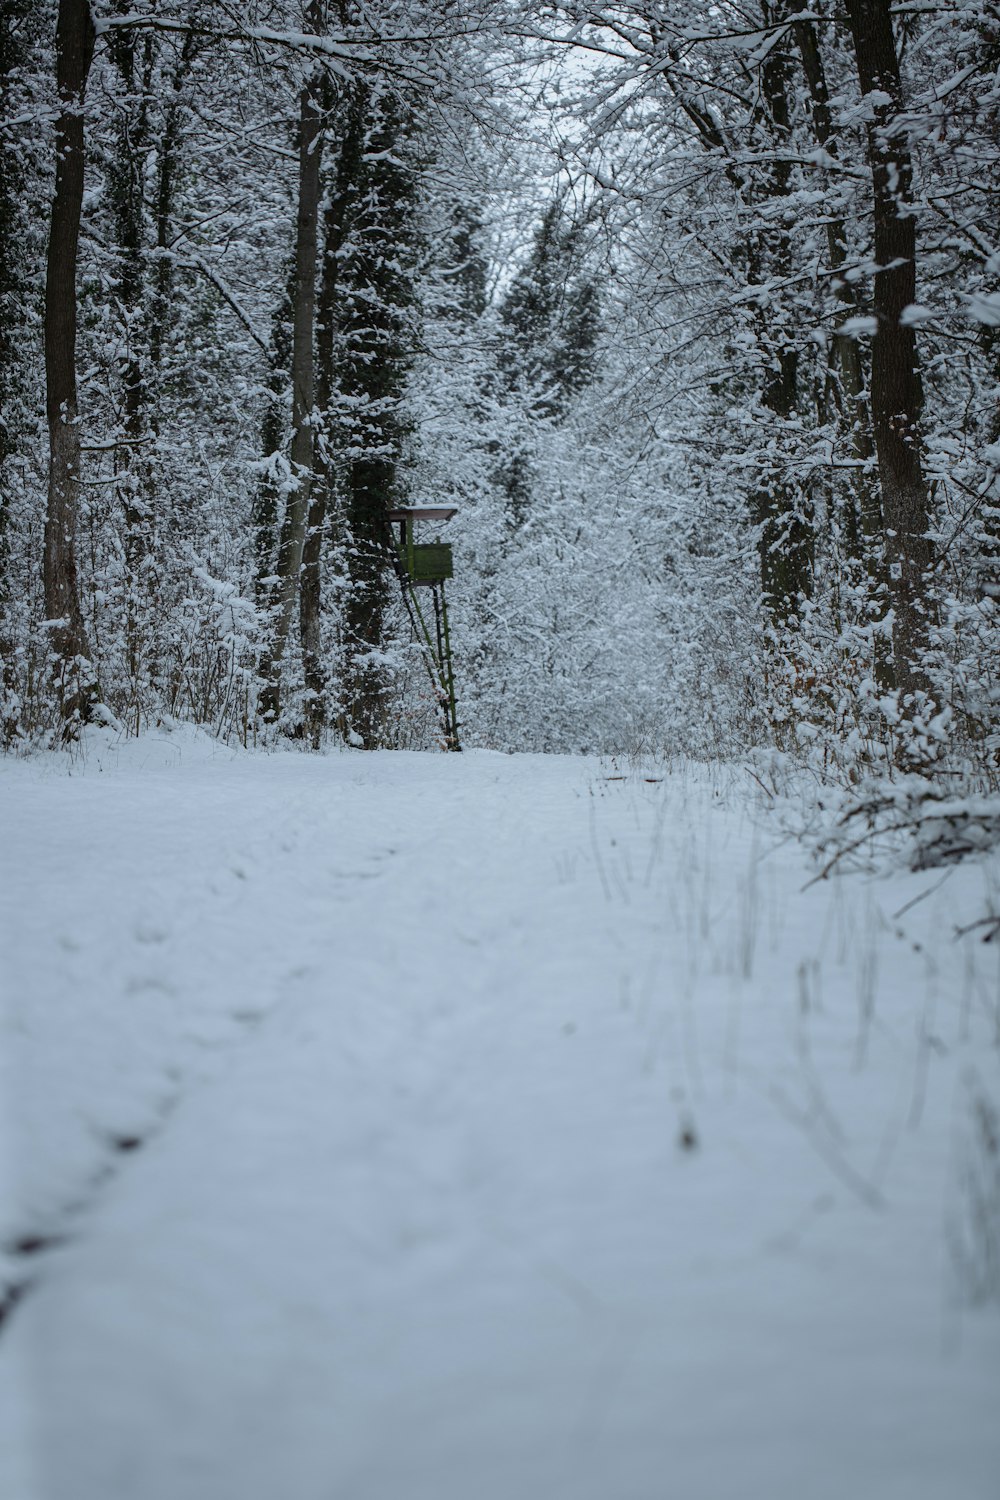 a path through a snowy forest with a bird feeder